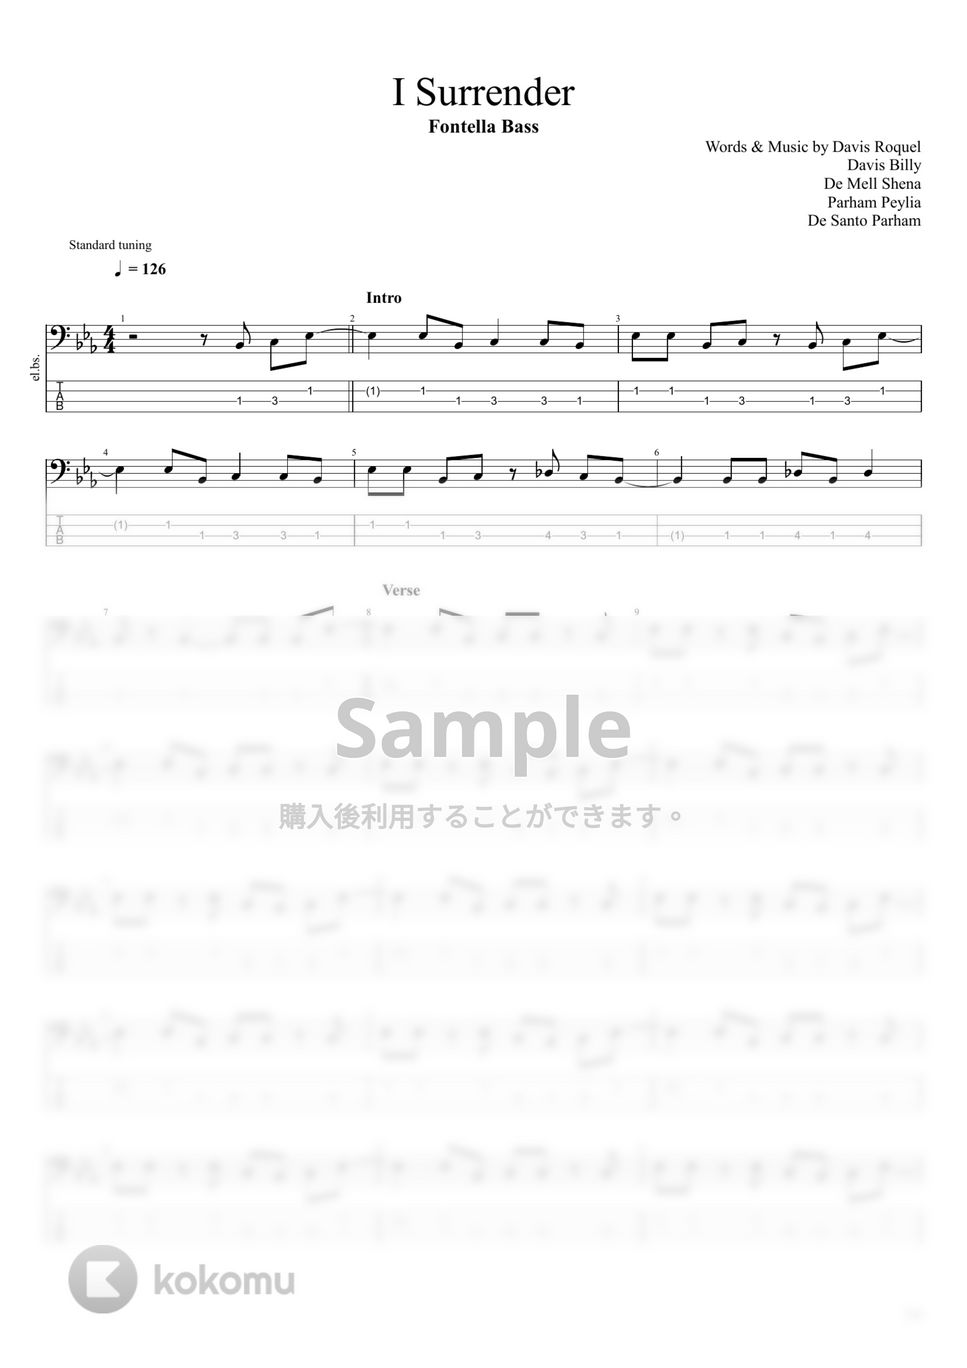 Fontella Bass - I Surrender by まっきん